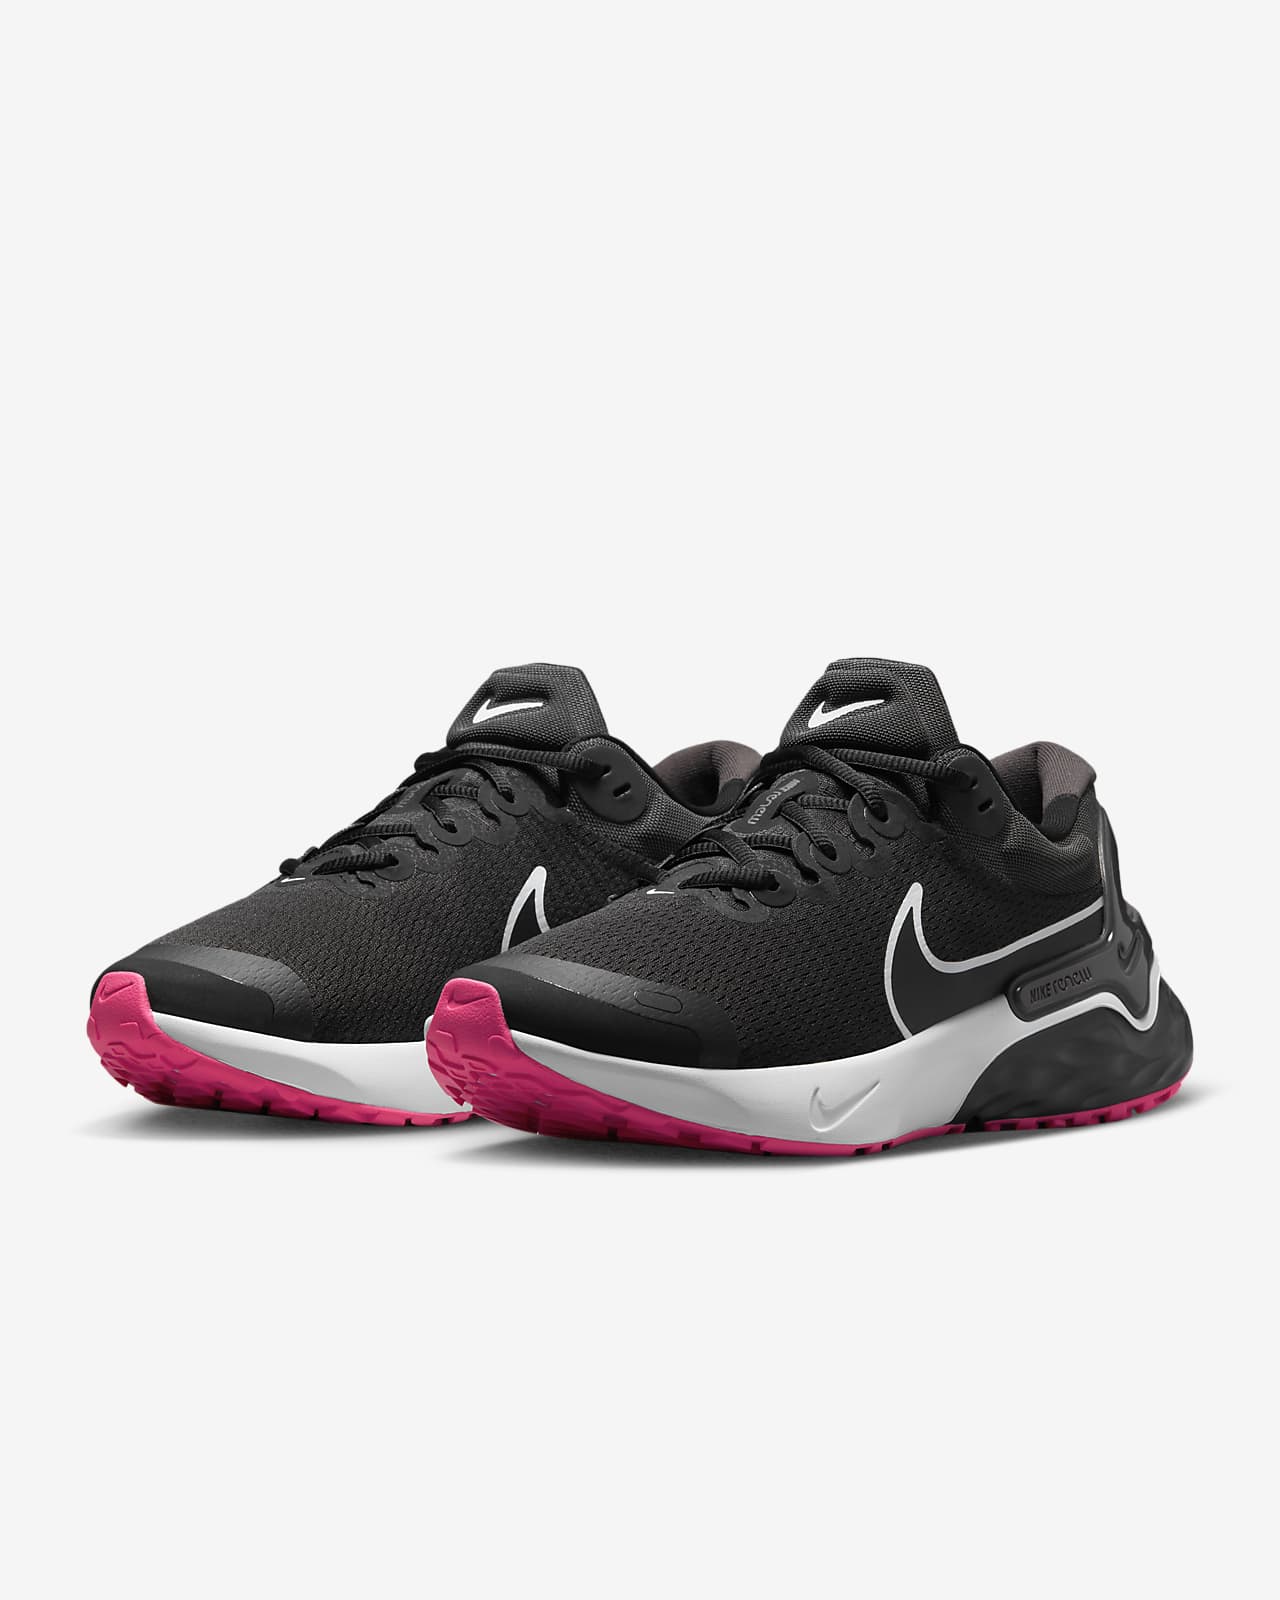 Nike Renew Run 3 Road Running Shoes.